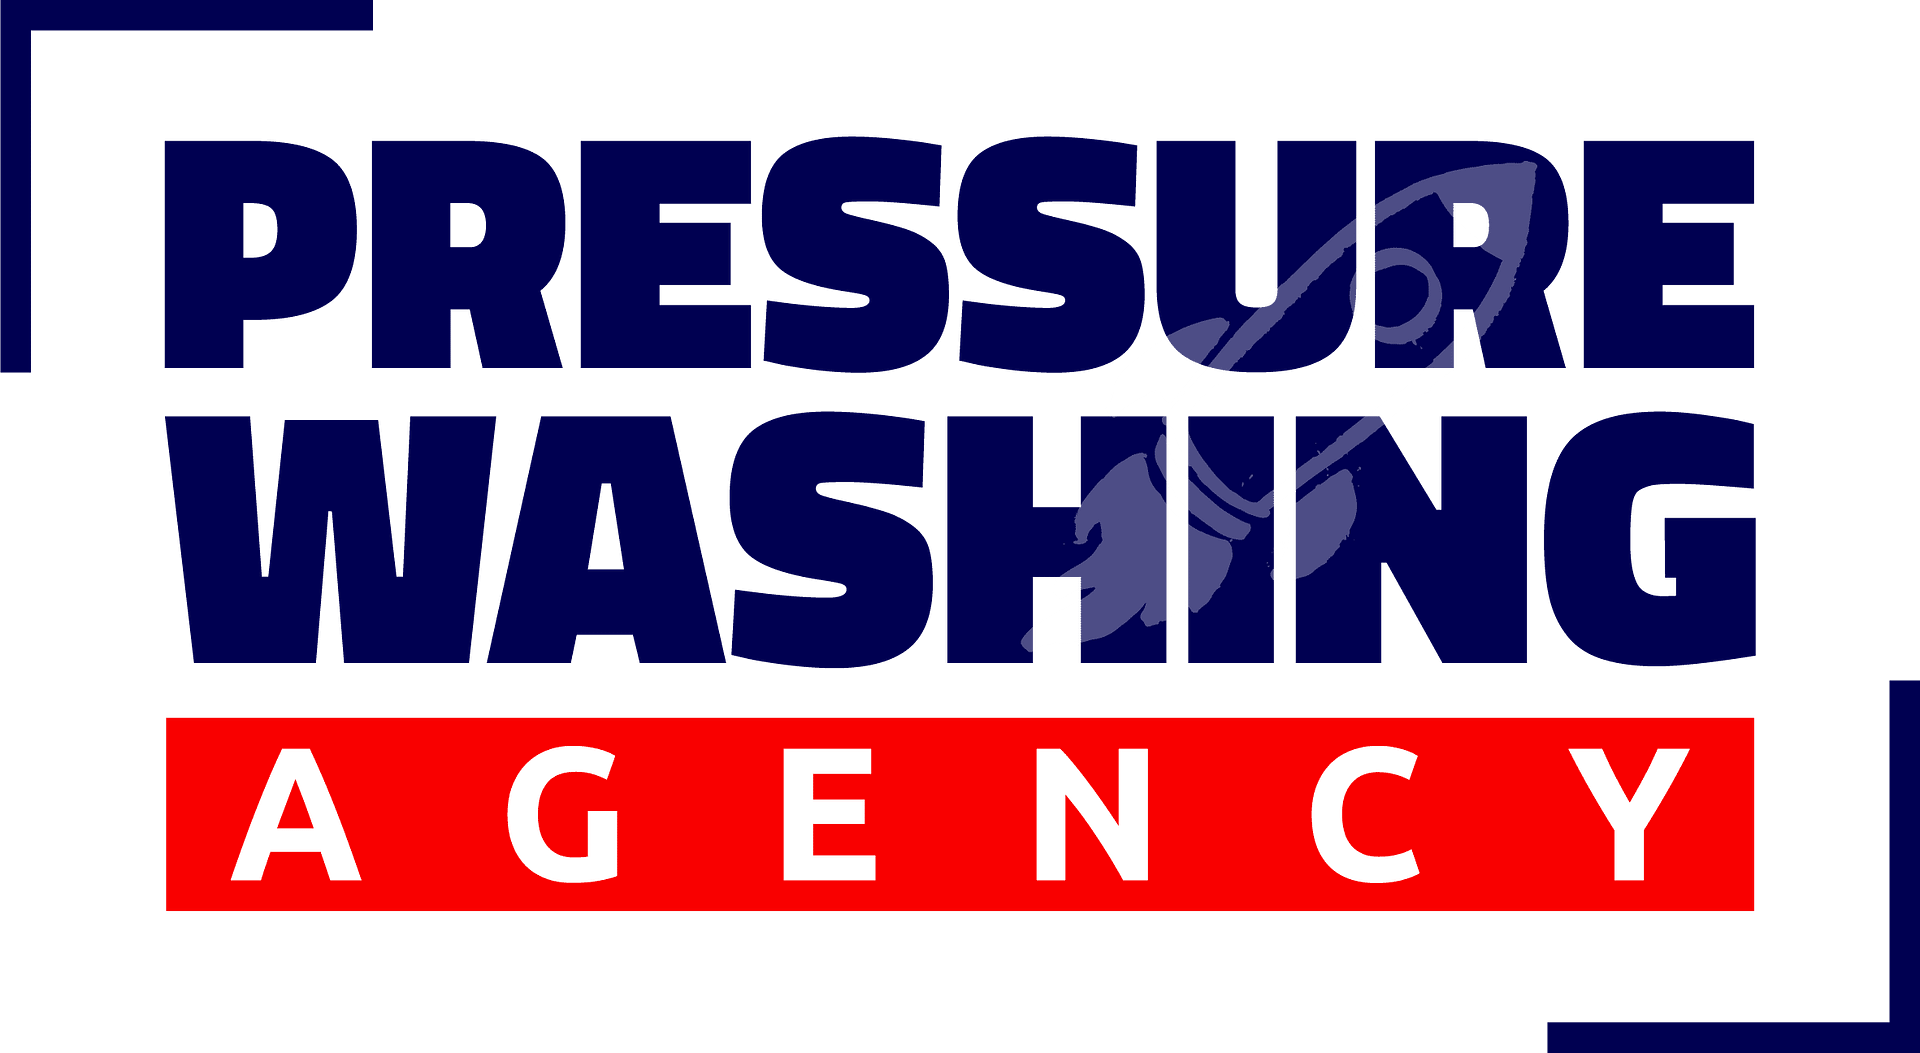 (c) Pressurewashingagency.com